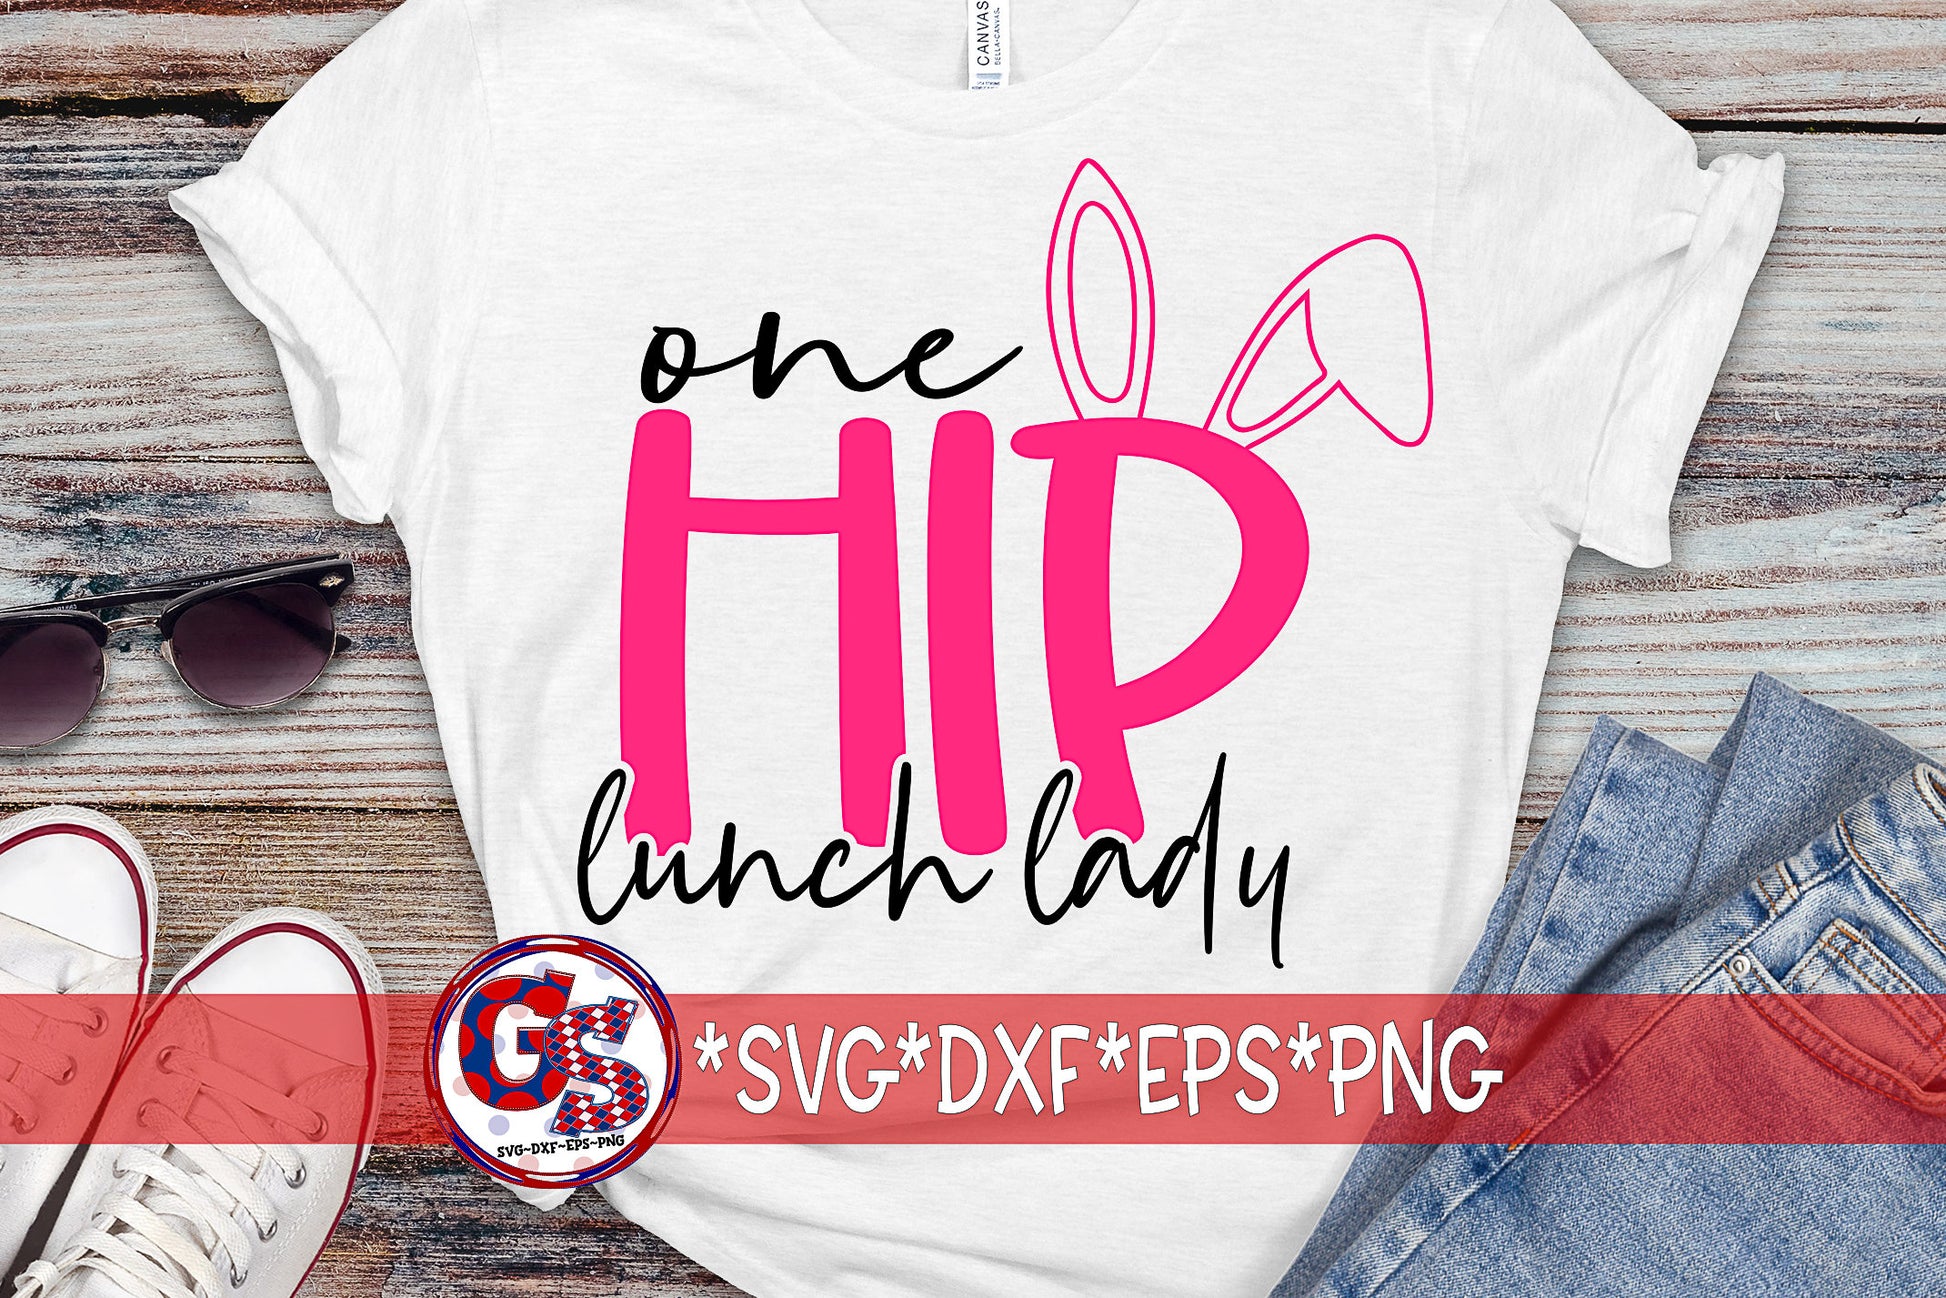 Easter SvG | One Hip Lunch Lady svg dxf eps png. One Hip Lunch Lady SvG | Easter Lunch Lady DxF | Food Services SvG | Instant Download File